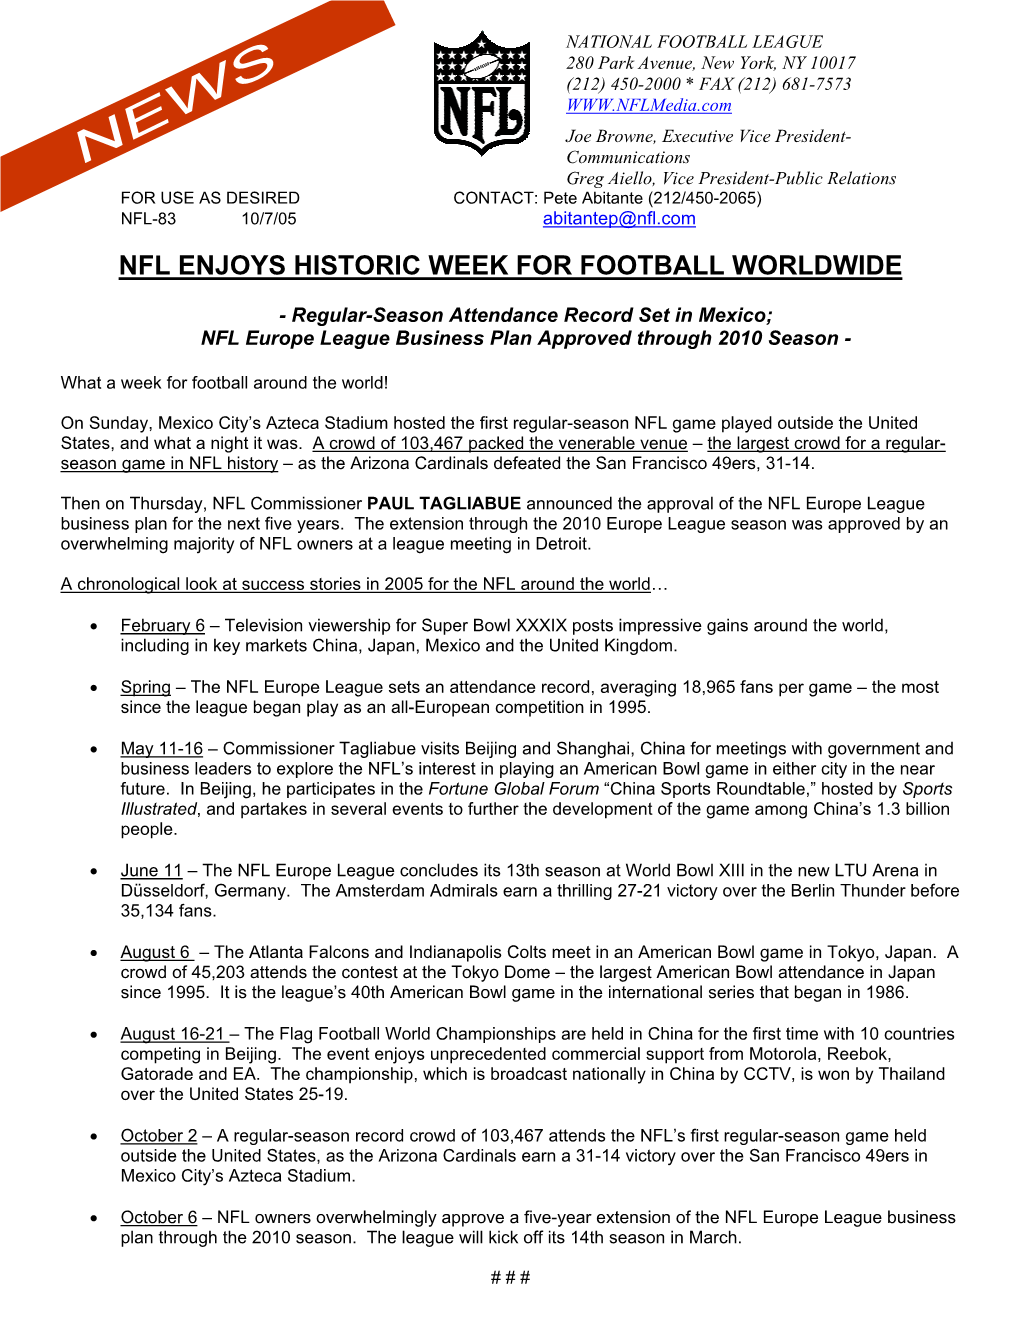 Nfl Enjoys Historic Week for Football Worldwide